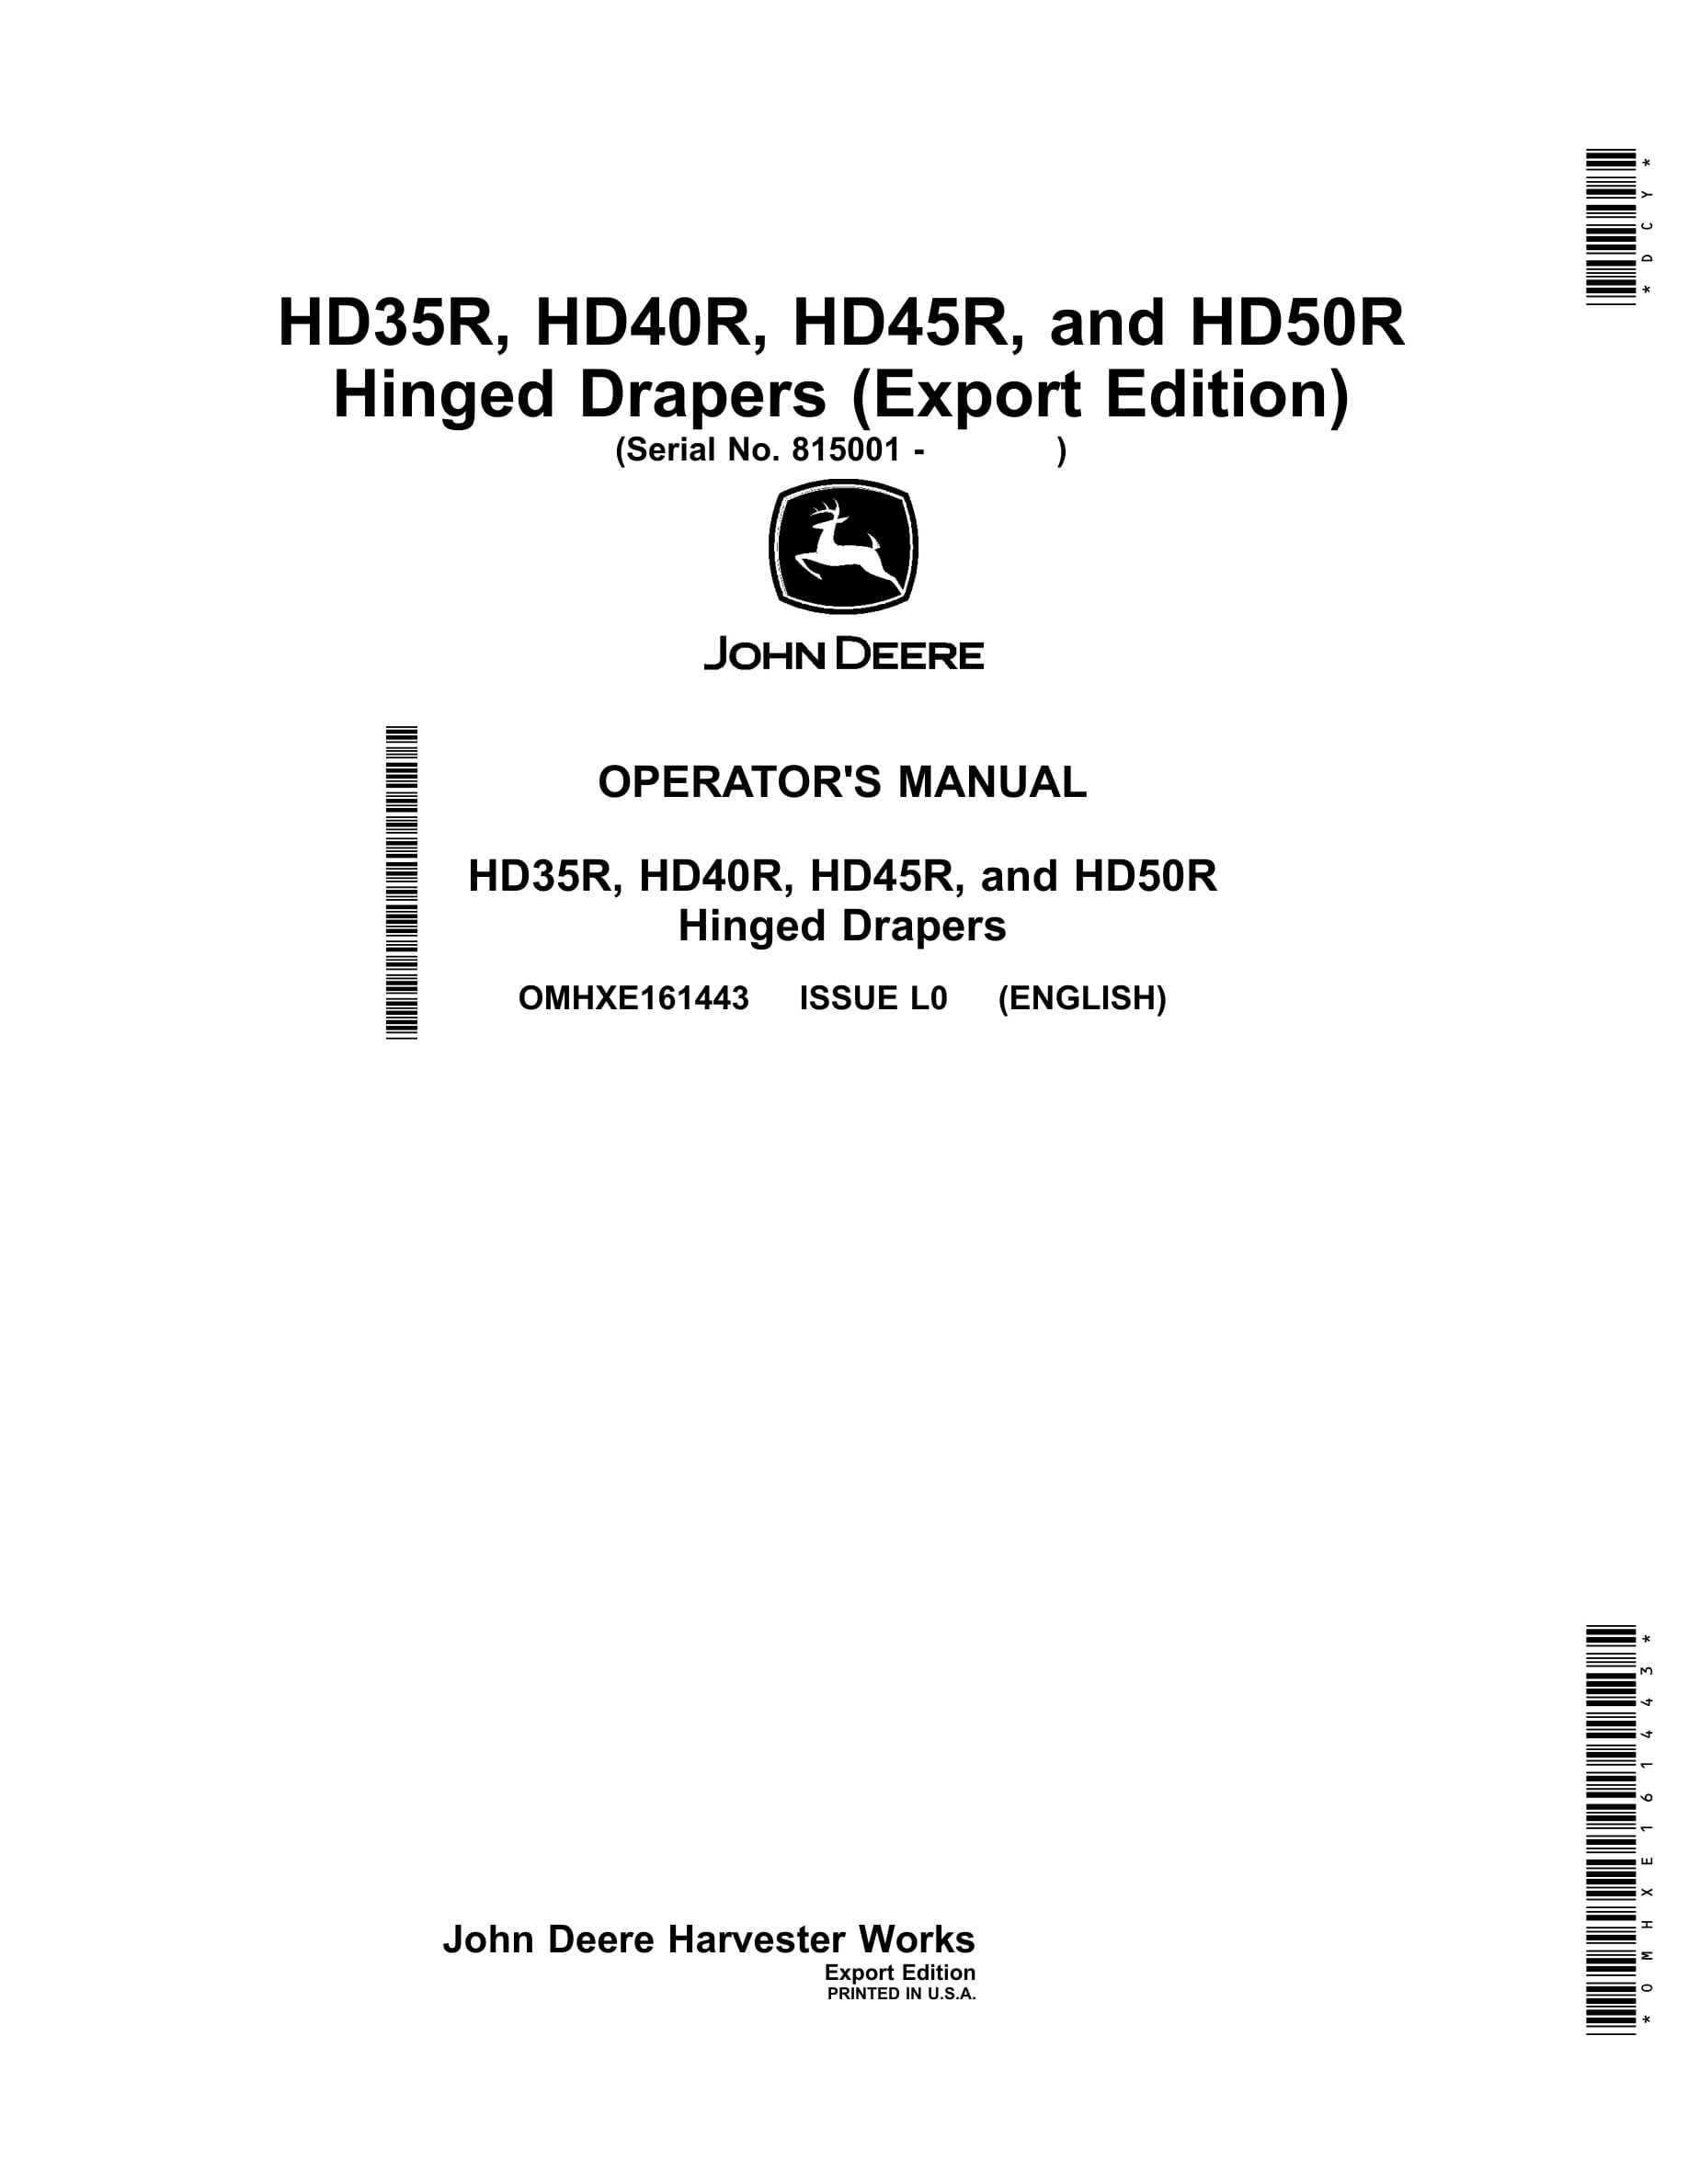 John Deere HD35R, HD40R, HD45R, and HD50R Hinged Drapers Operator Manual OMHXE161443-1